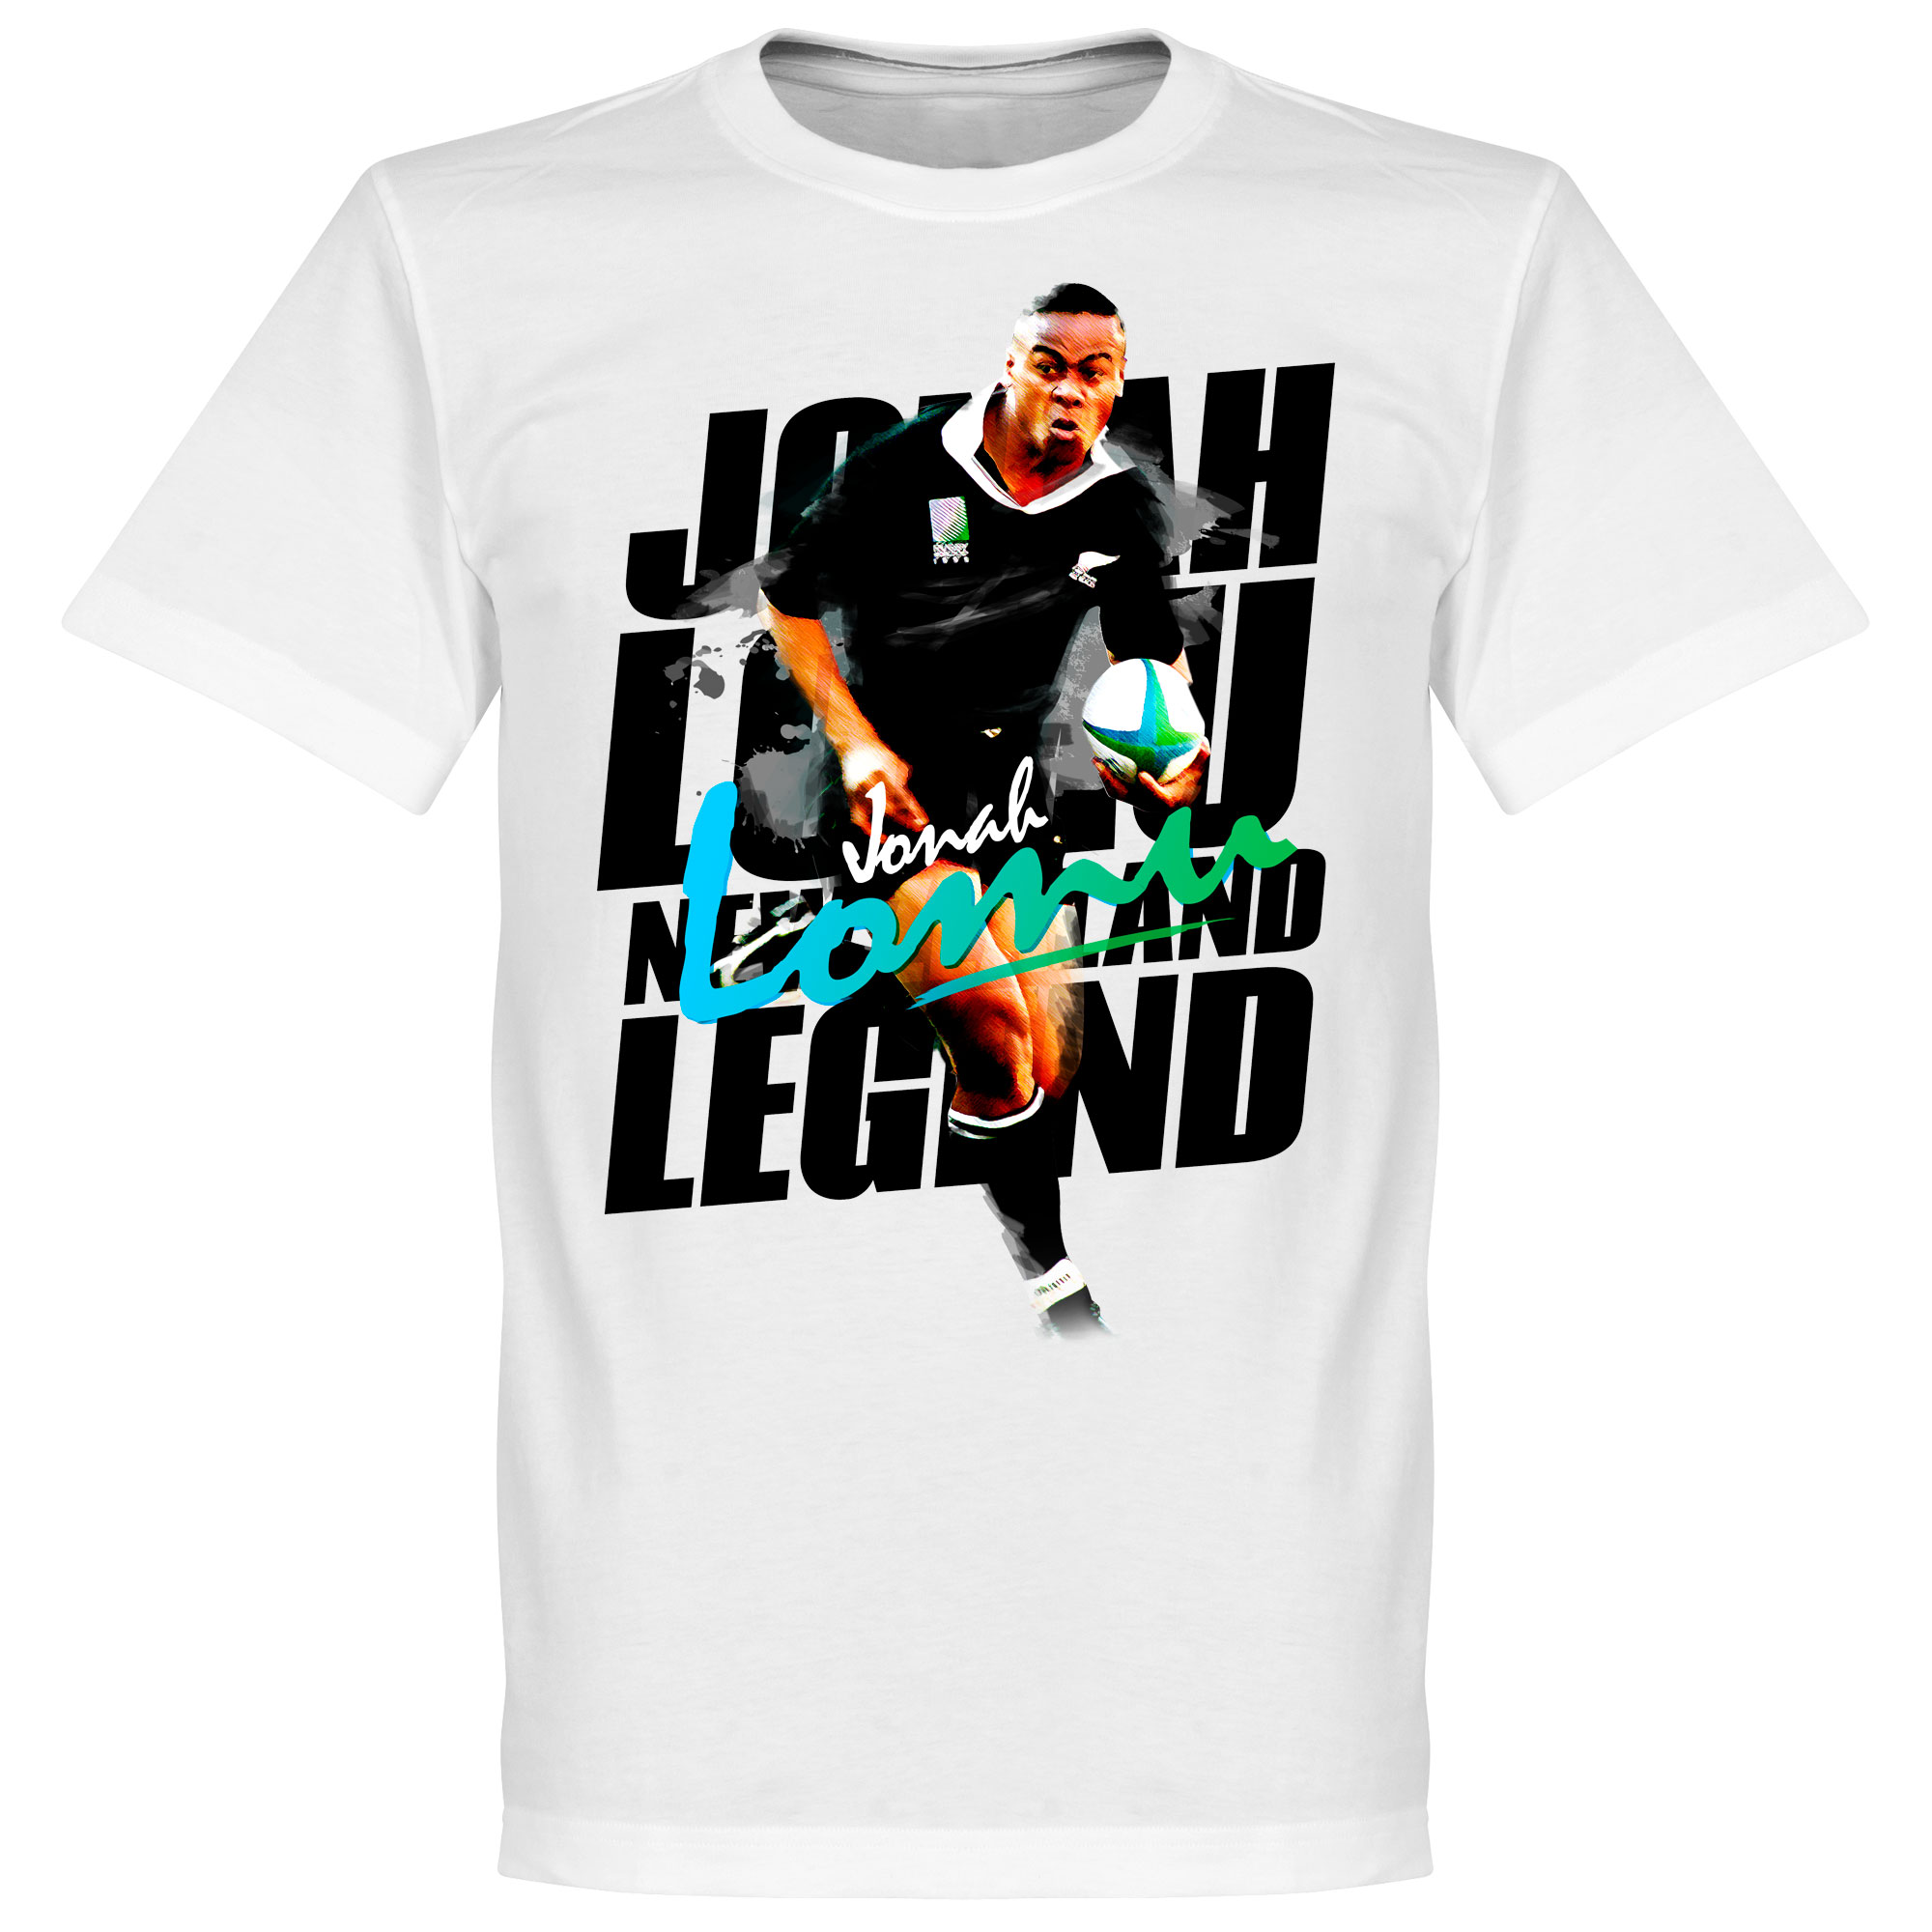 Jonah Lomu Legend T-Shirt XL